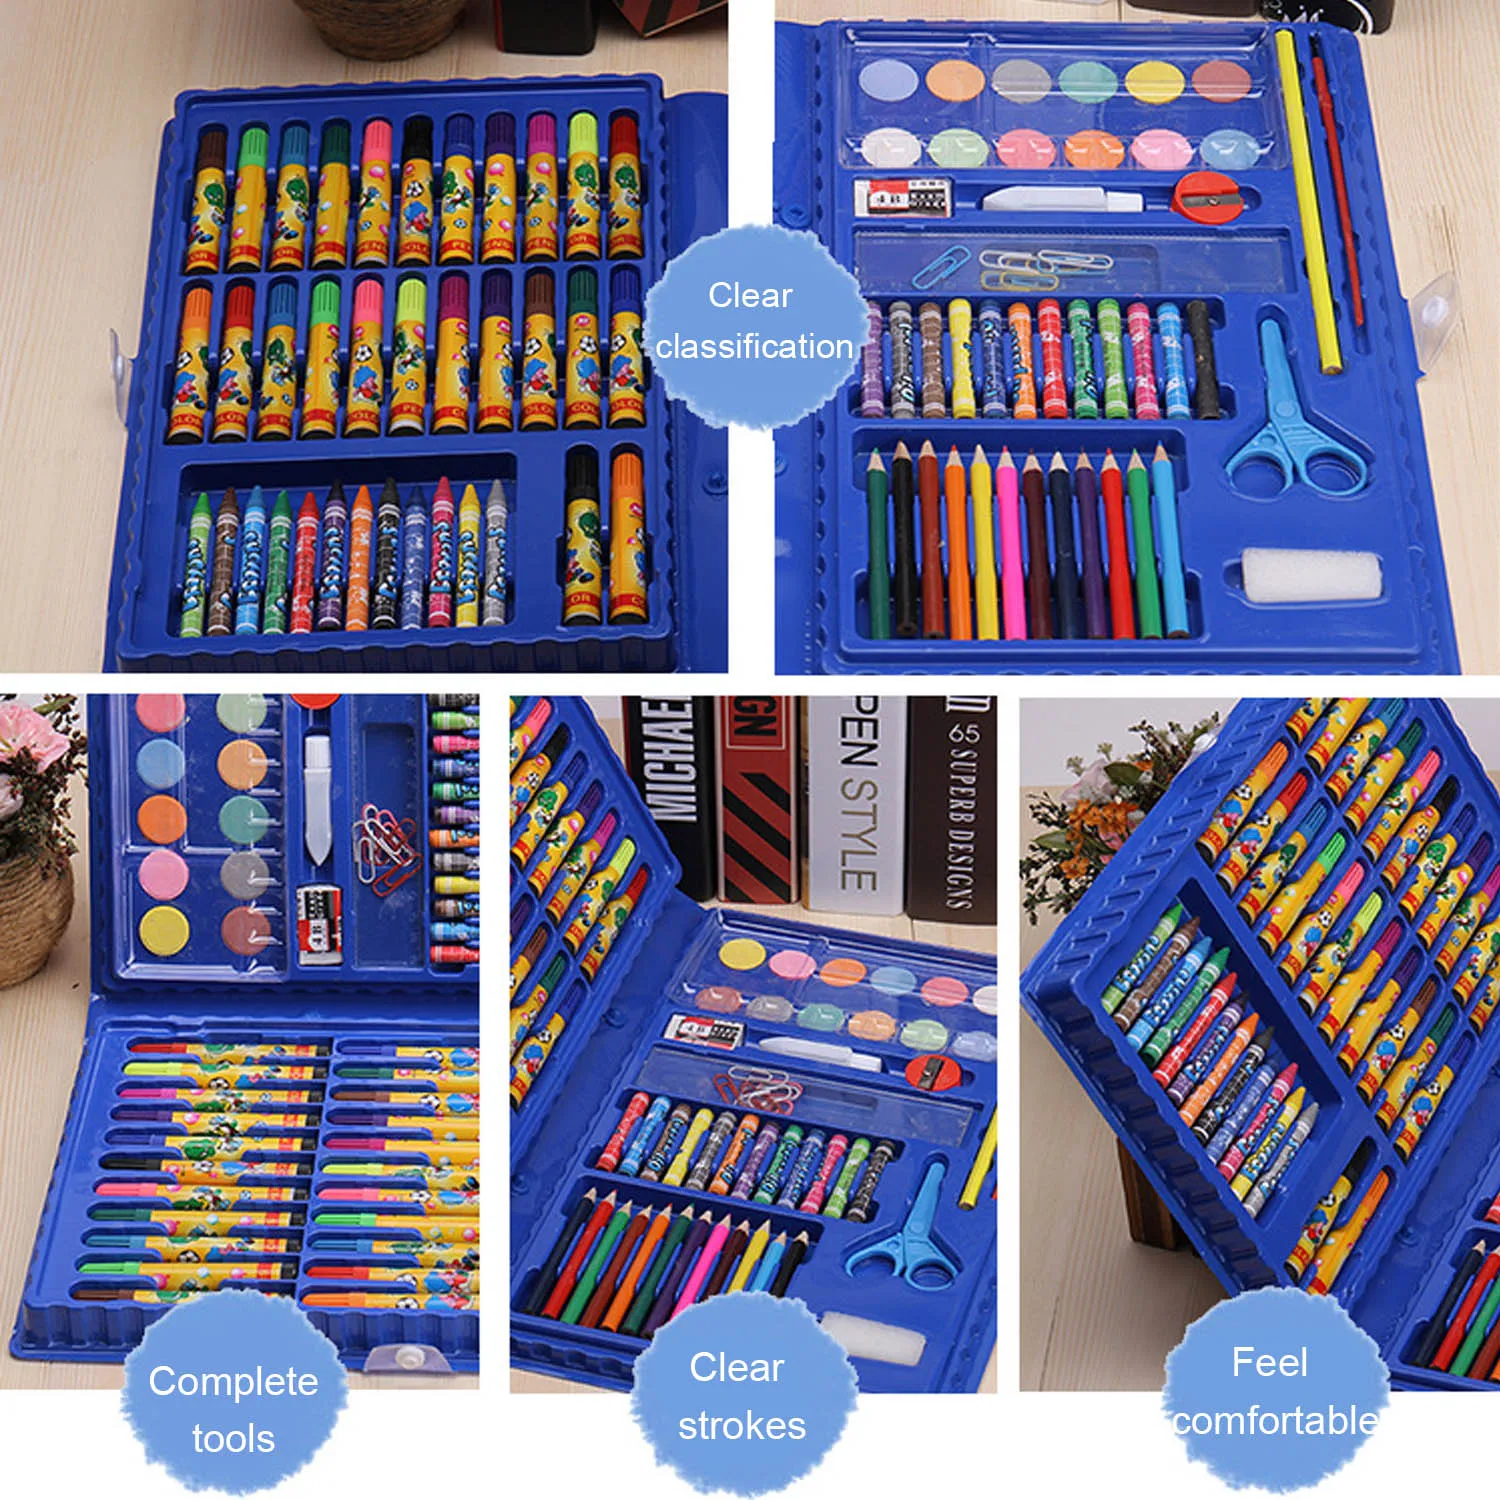 https://ae01.alicdn.com/kf/H24139b0e026d454ca68ec2c7db997ebfU/86pcs-Kids-Colored-Pencil-Artist-Kit-Painting-Crayon-Marker-Pen-Brush-Drawing-Tools-Kindergarten-Supplies-Kids.jpg